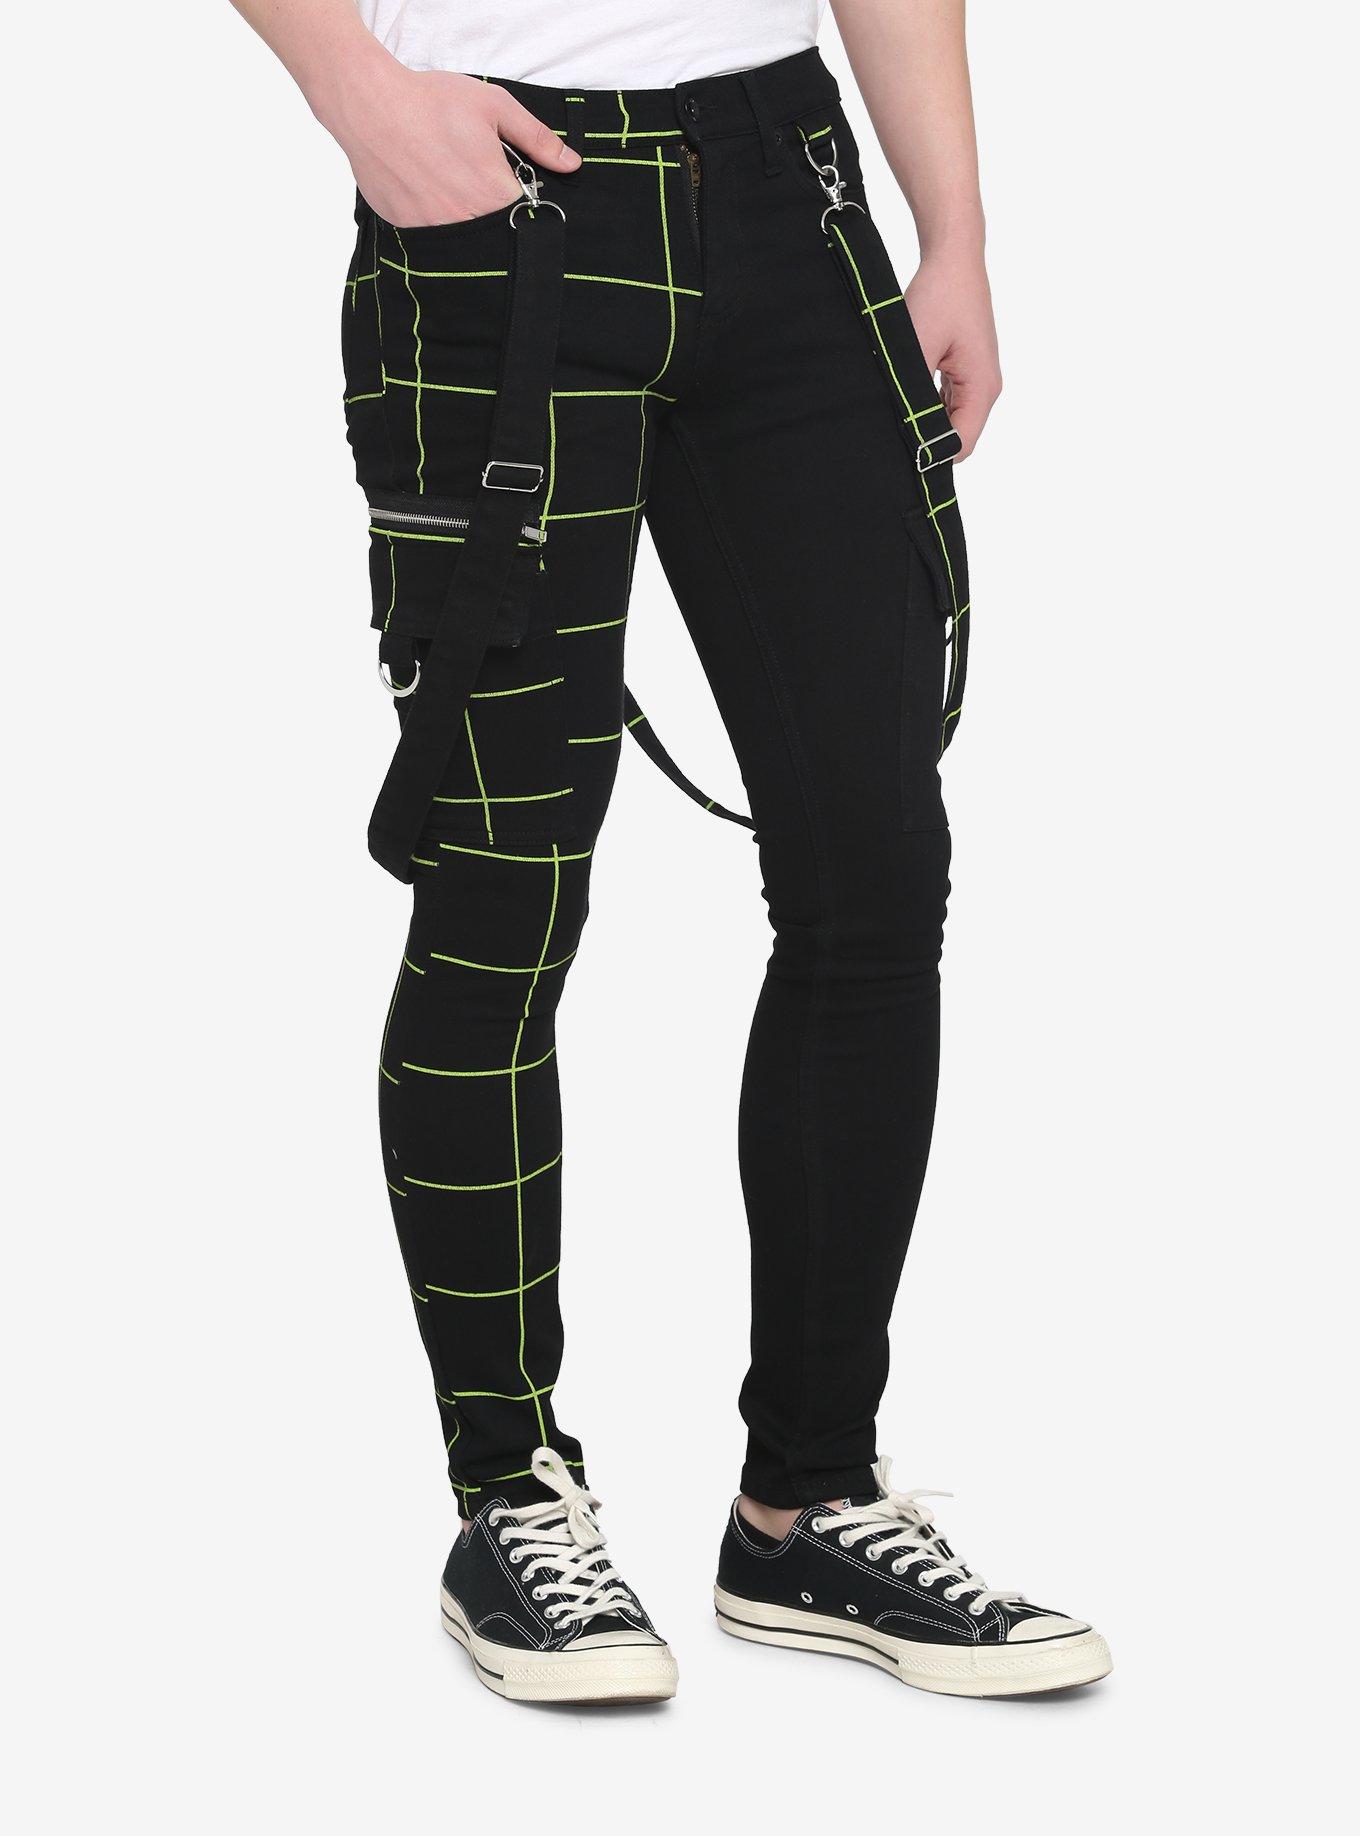 HT Denim Black & Green Split Grid Stinger Jeans